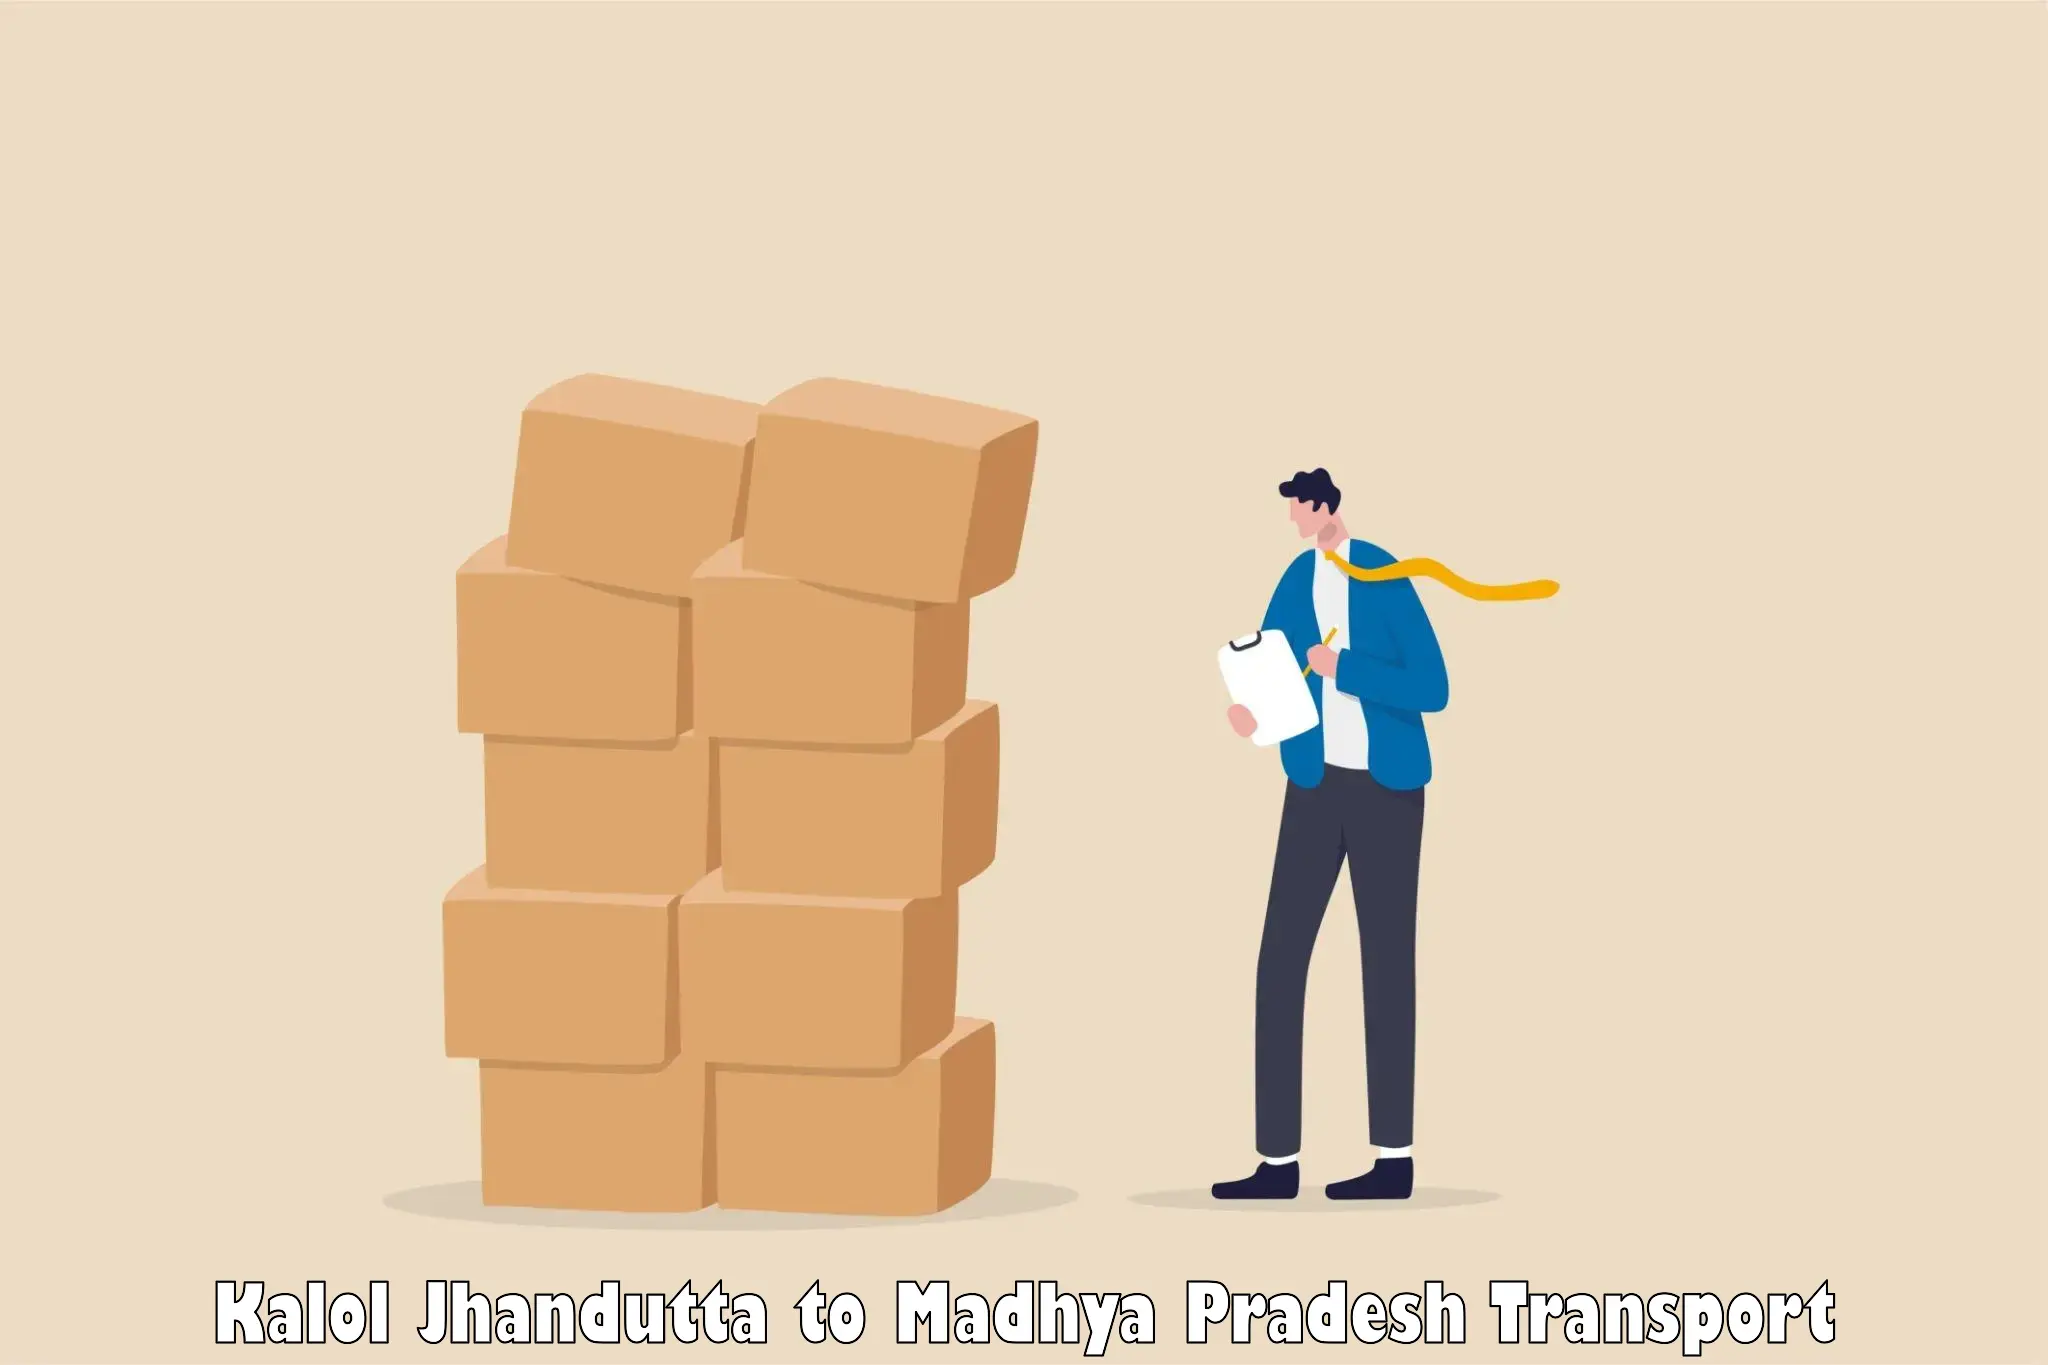 Truck transport companies in India Kalol Jhandutta to Datia